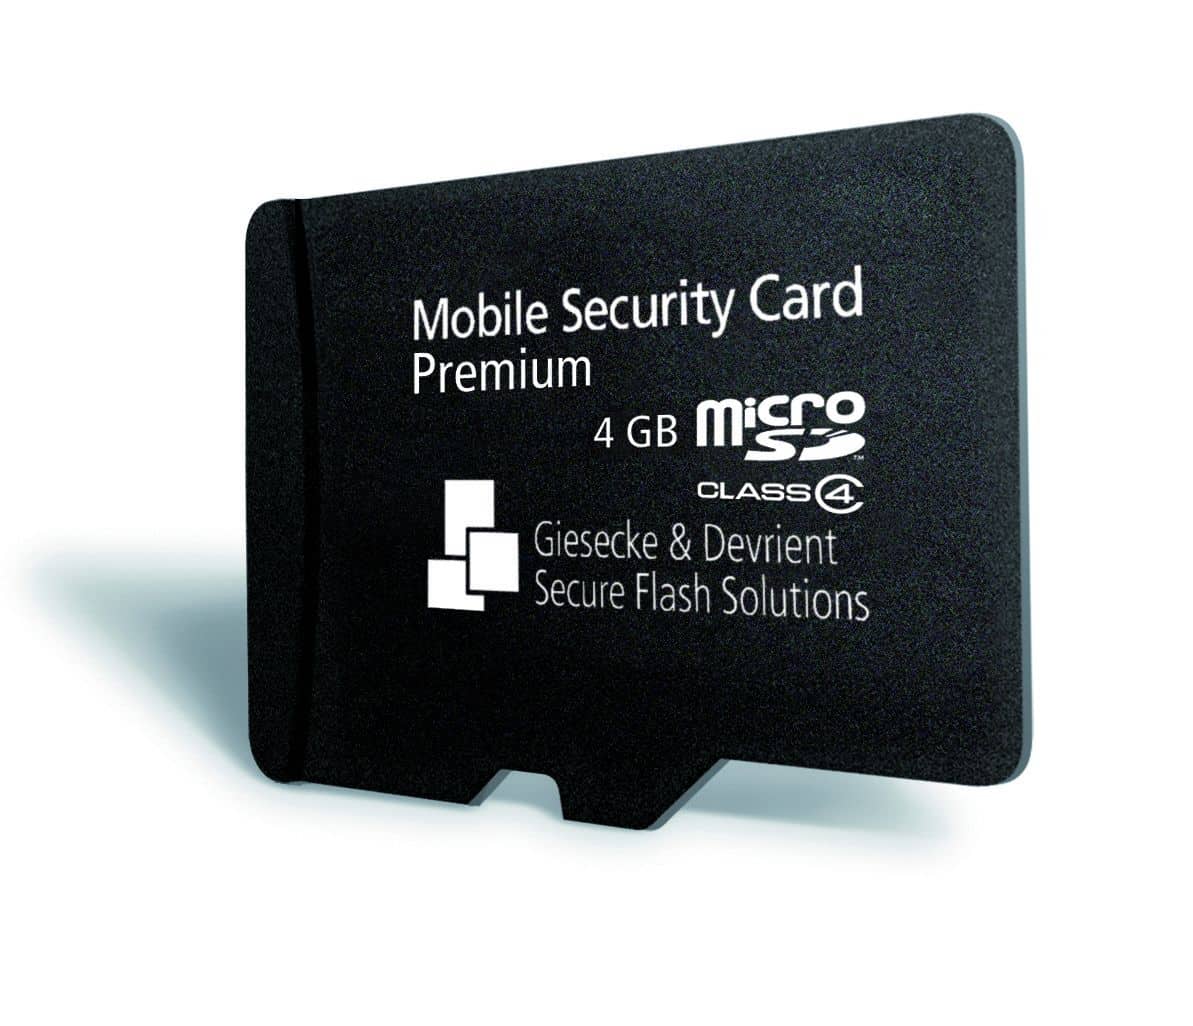 G&D SFS Mobile Security Card Premium, Image Credit: gd-sfs